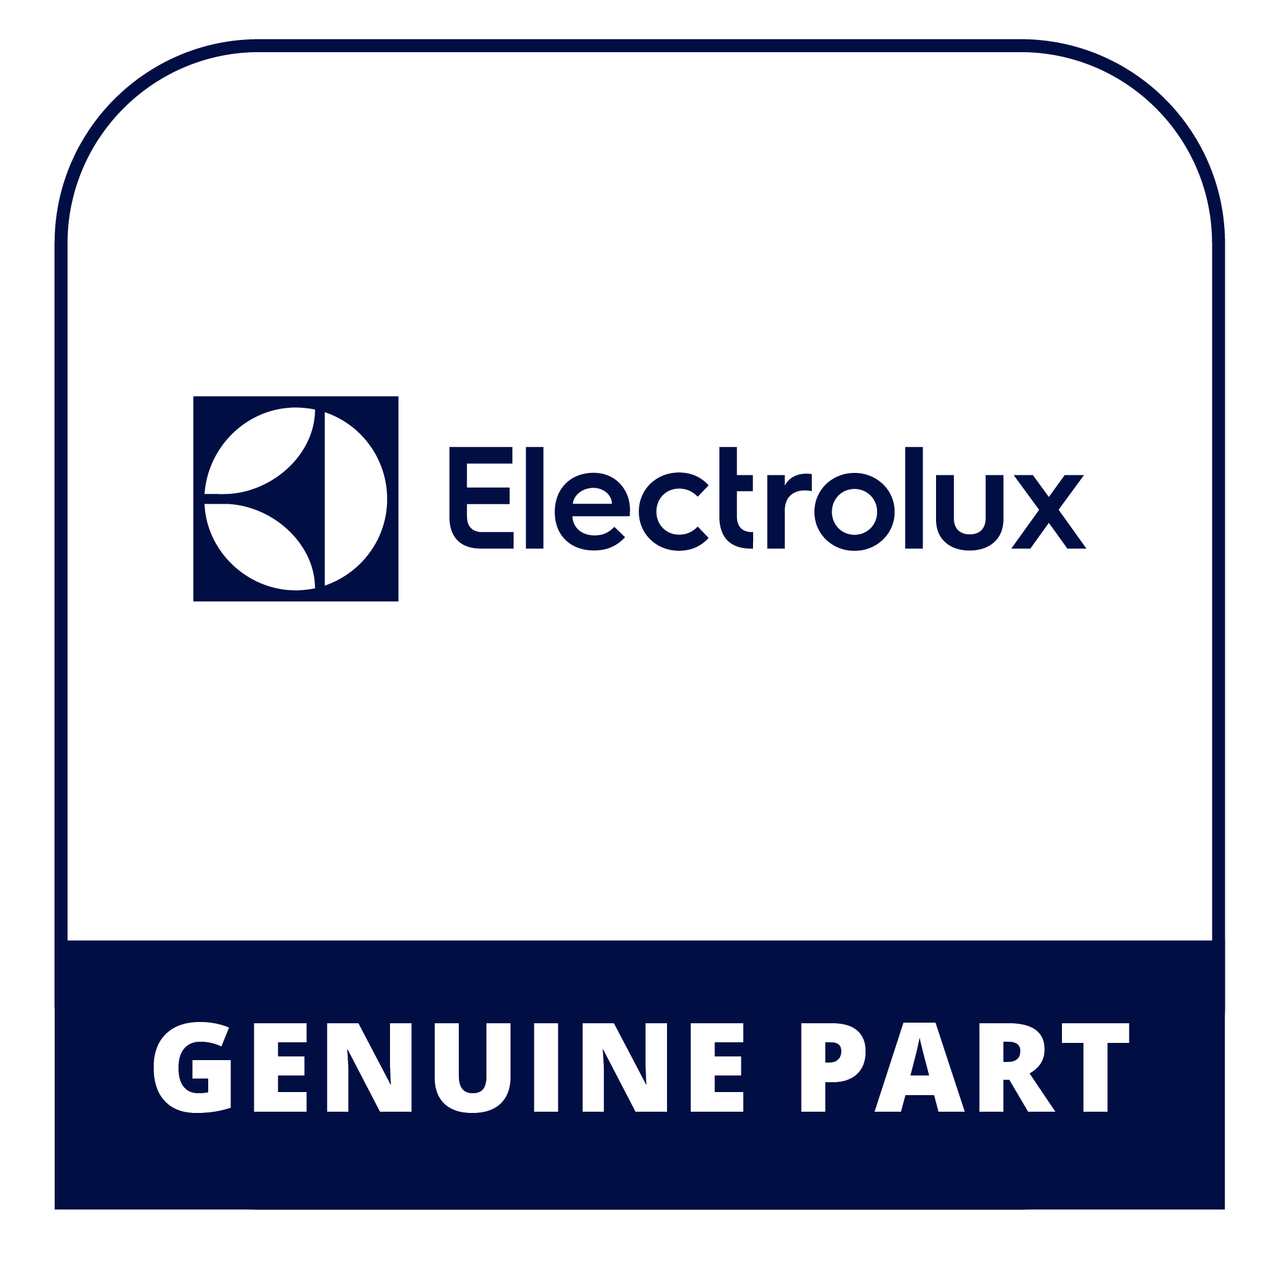 Frigidaire - Electrolux 318262811 Bracket - Genuine Electrolux Part